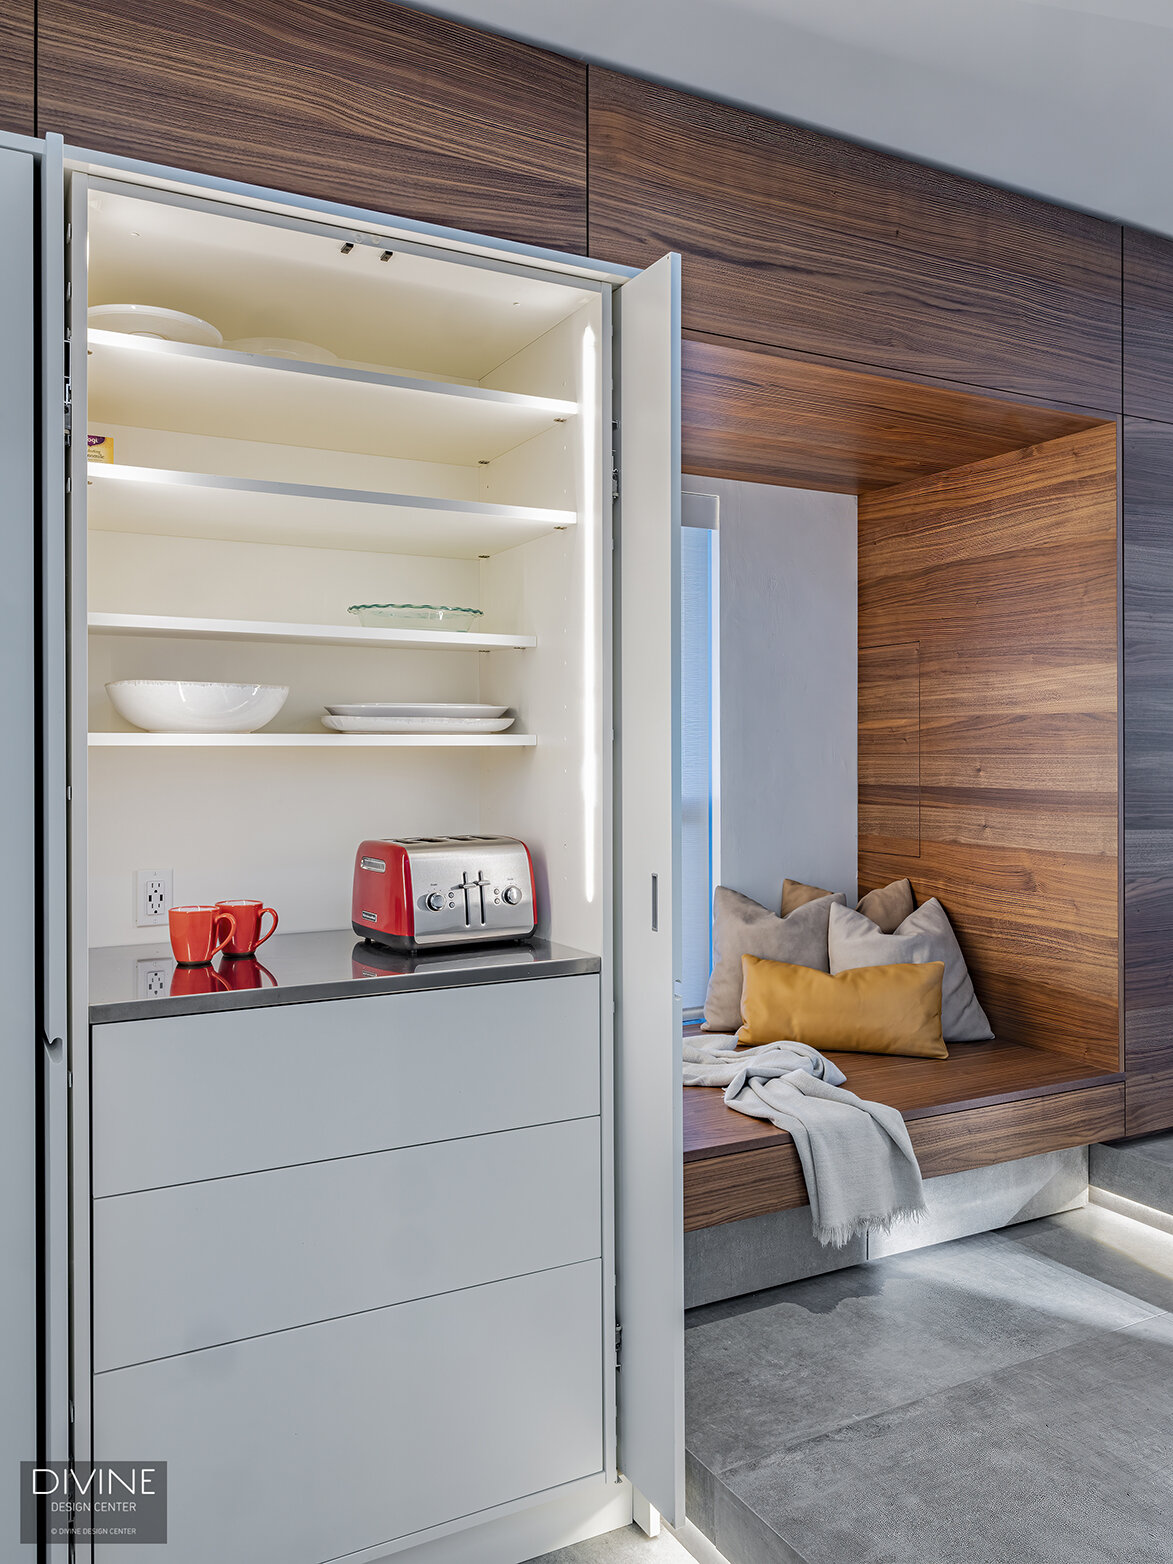  Hidden, white niche shelving and interior lighting for extra kitchen storage by Leicht.  